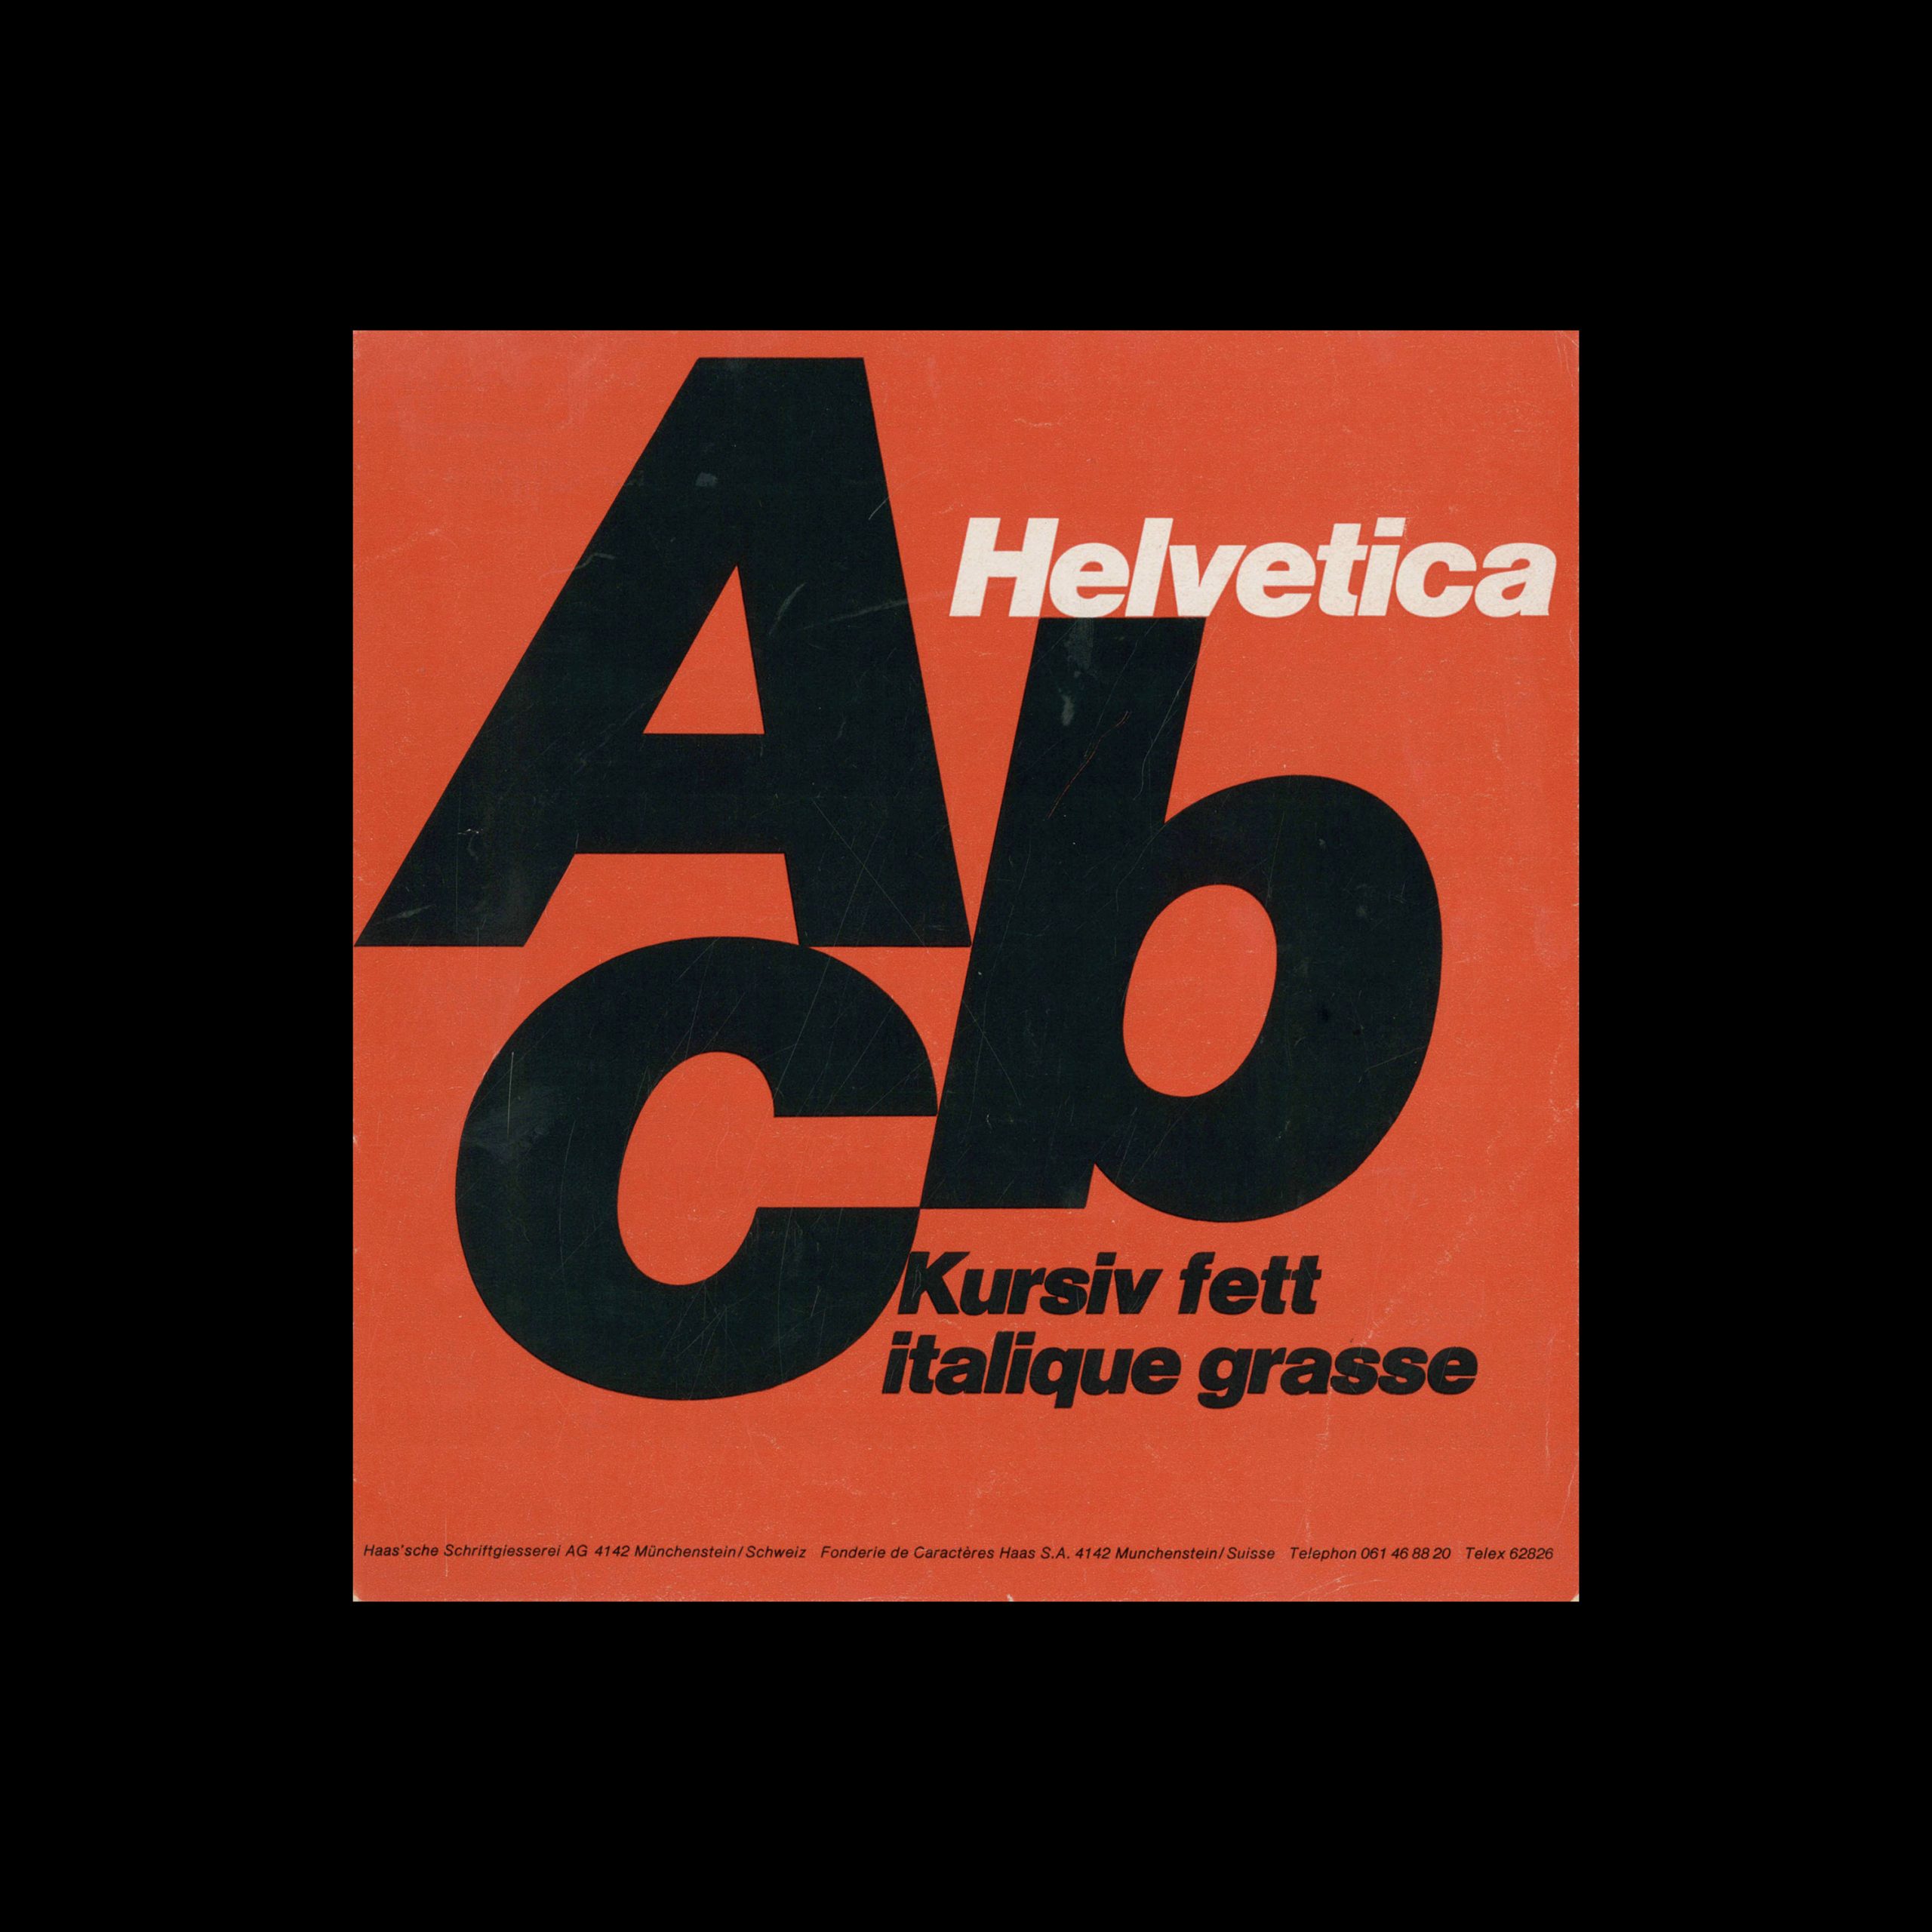 Helvetica Kursiv fett, Haas'sche SchriftgieBerei / Fonderie Haas, 1960s